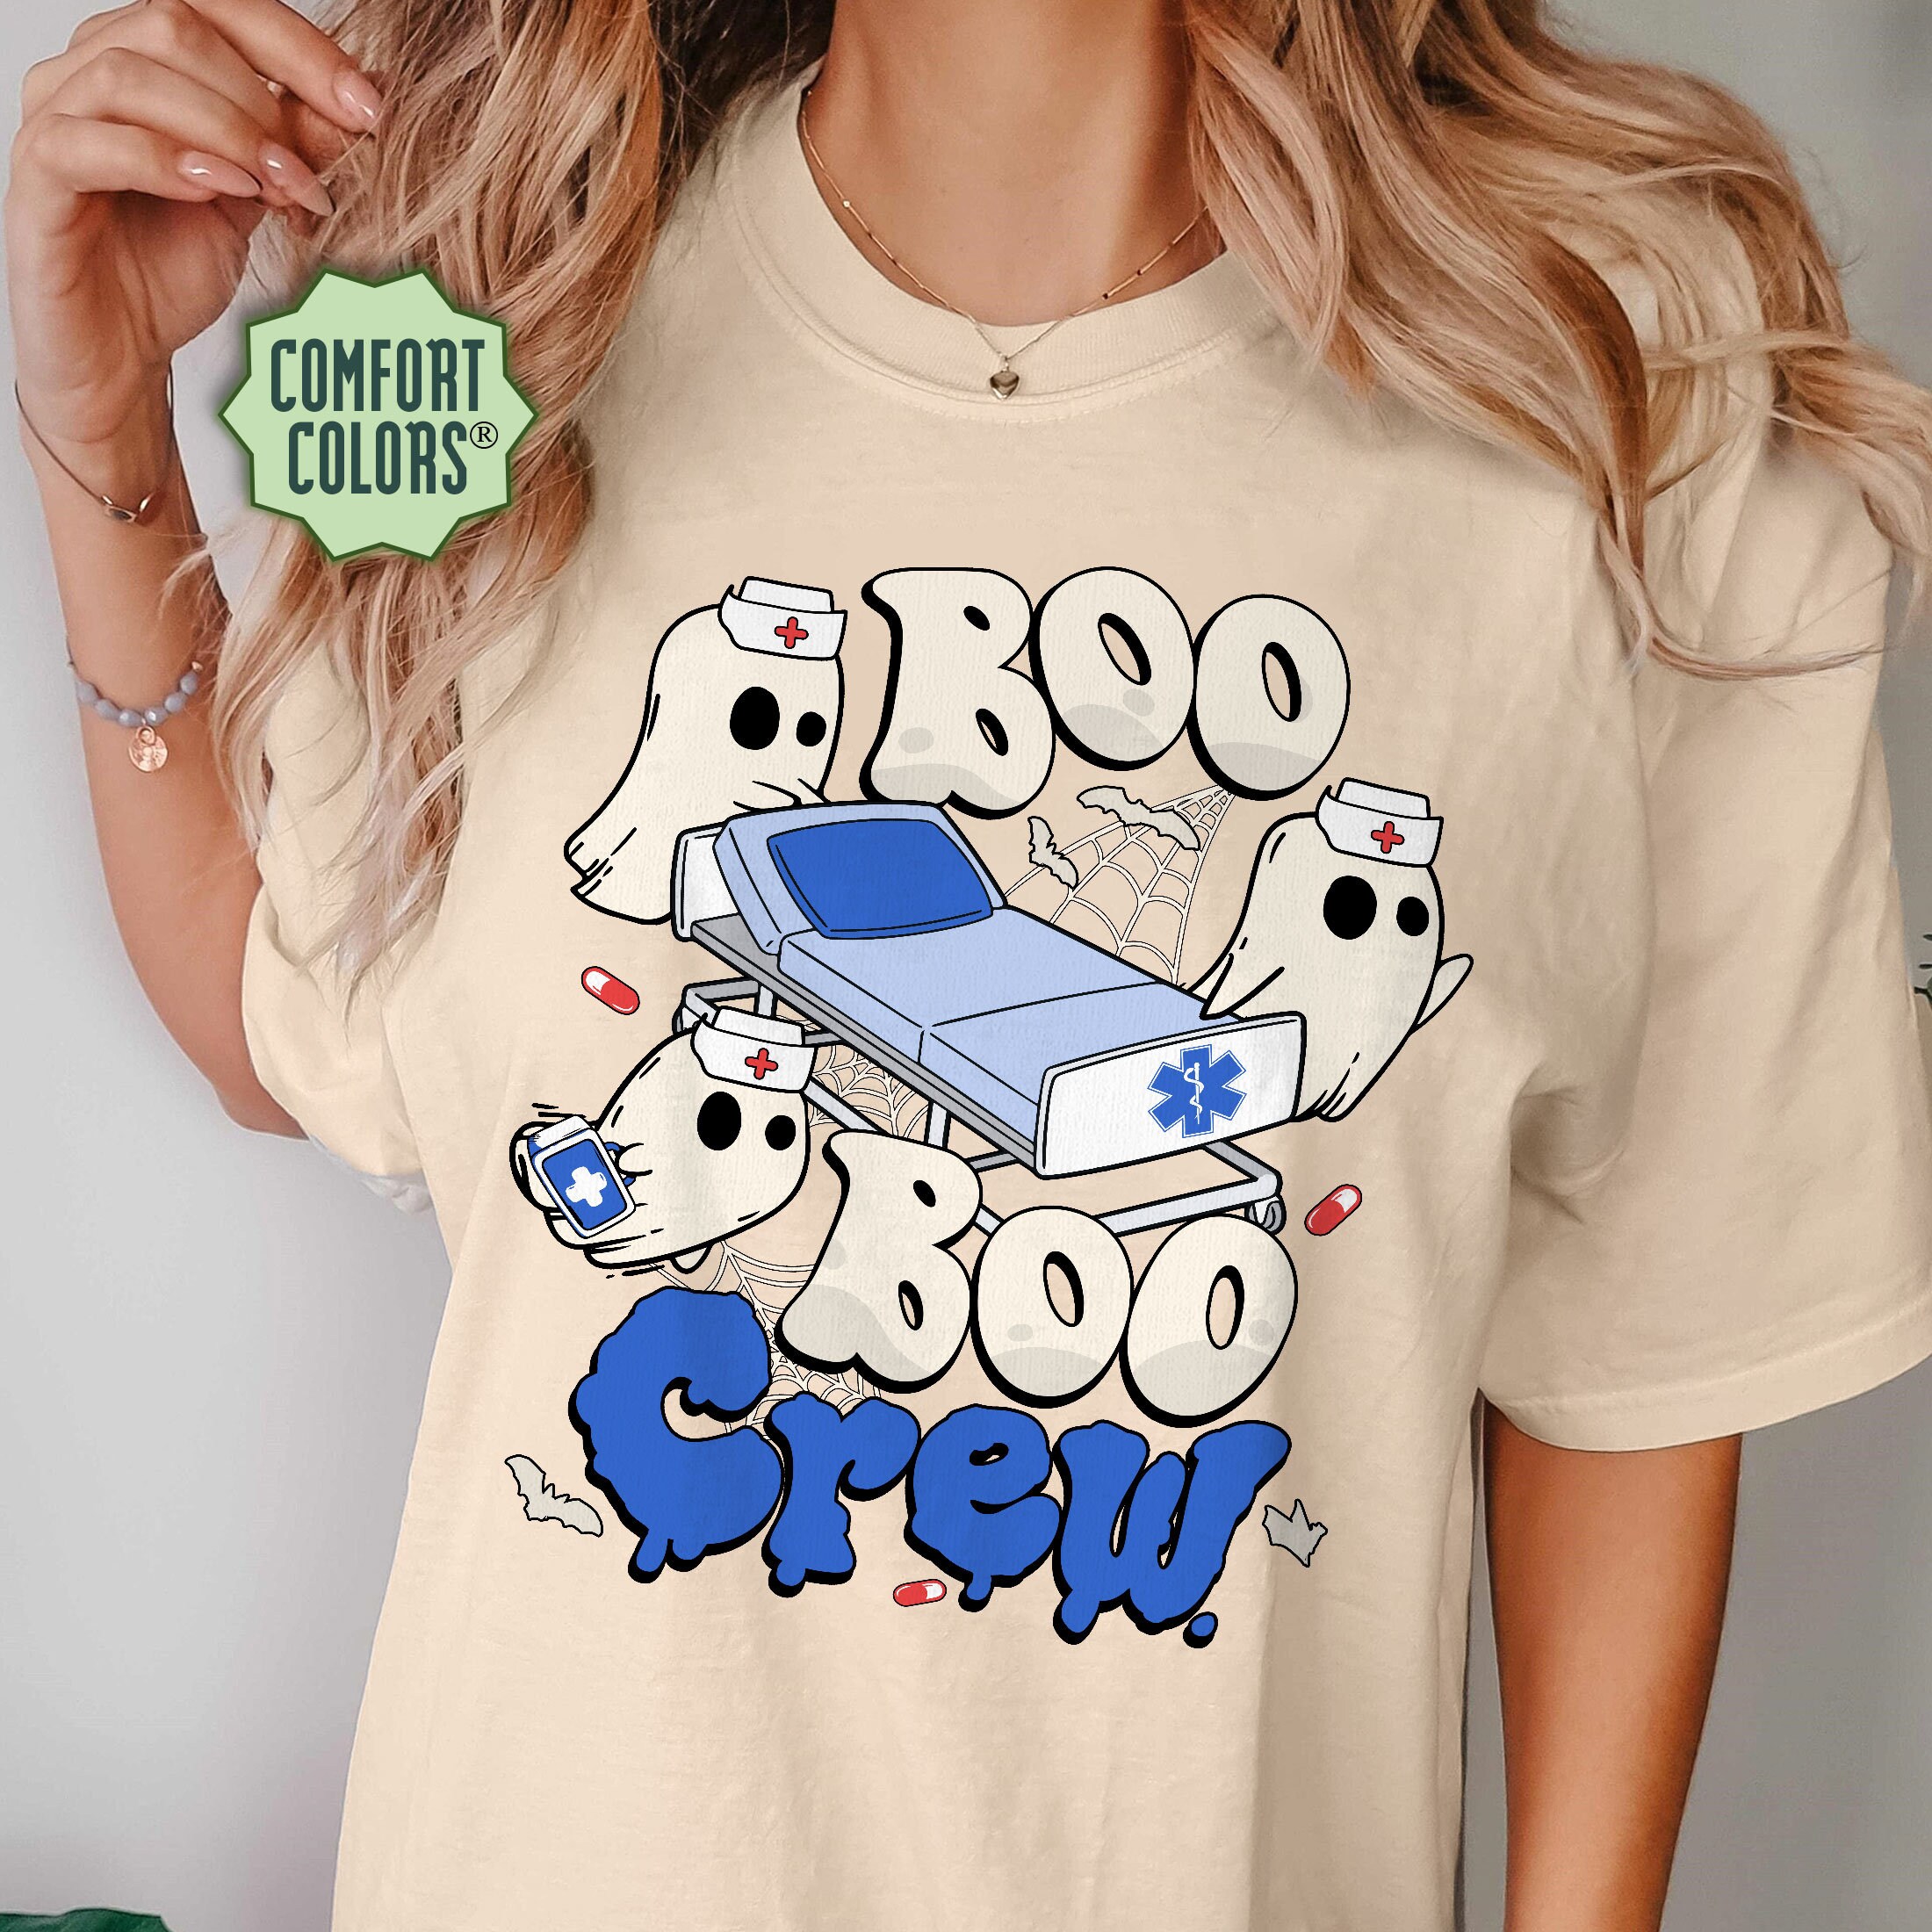 Boo Crew Comfort Color Shirt Halloween Nurse Skeleton Shirt - Etsy